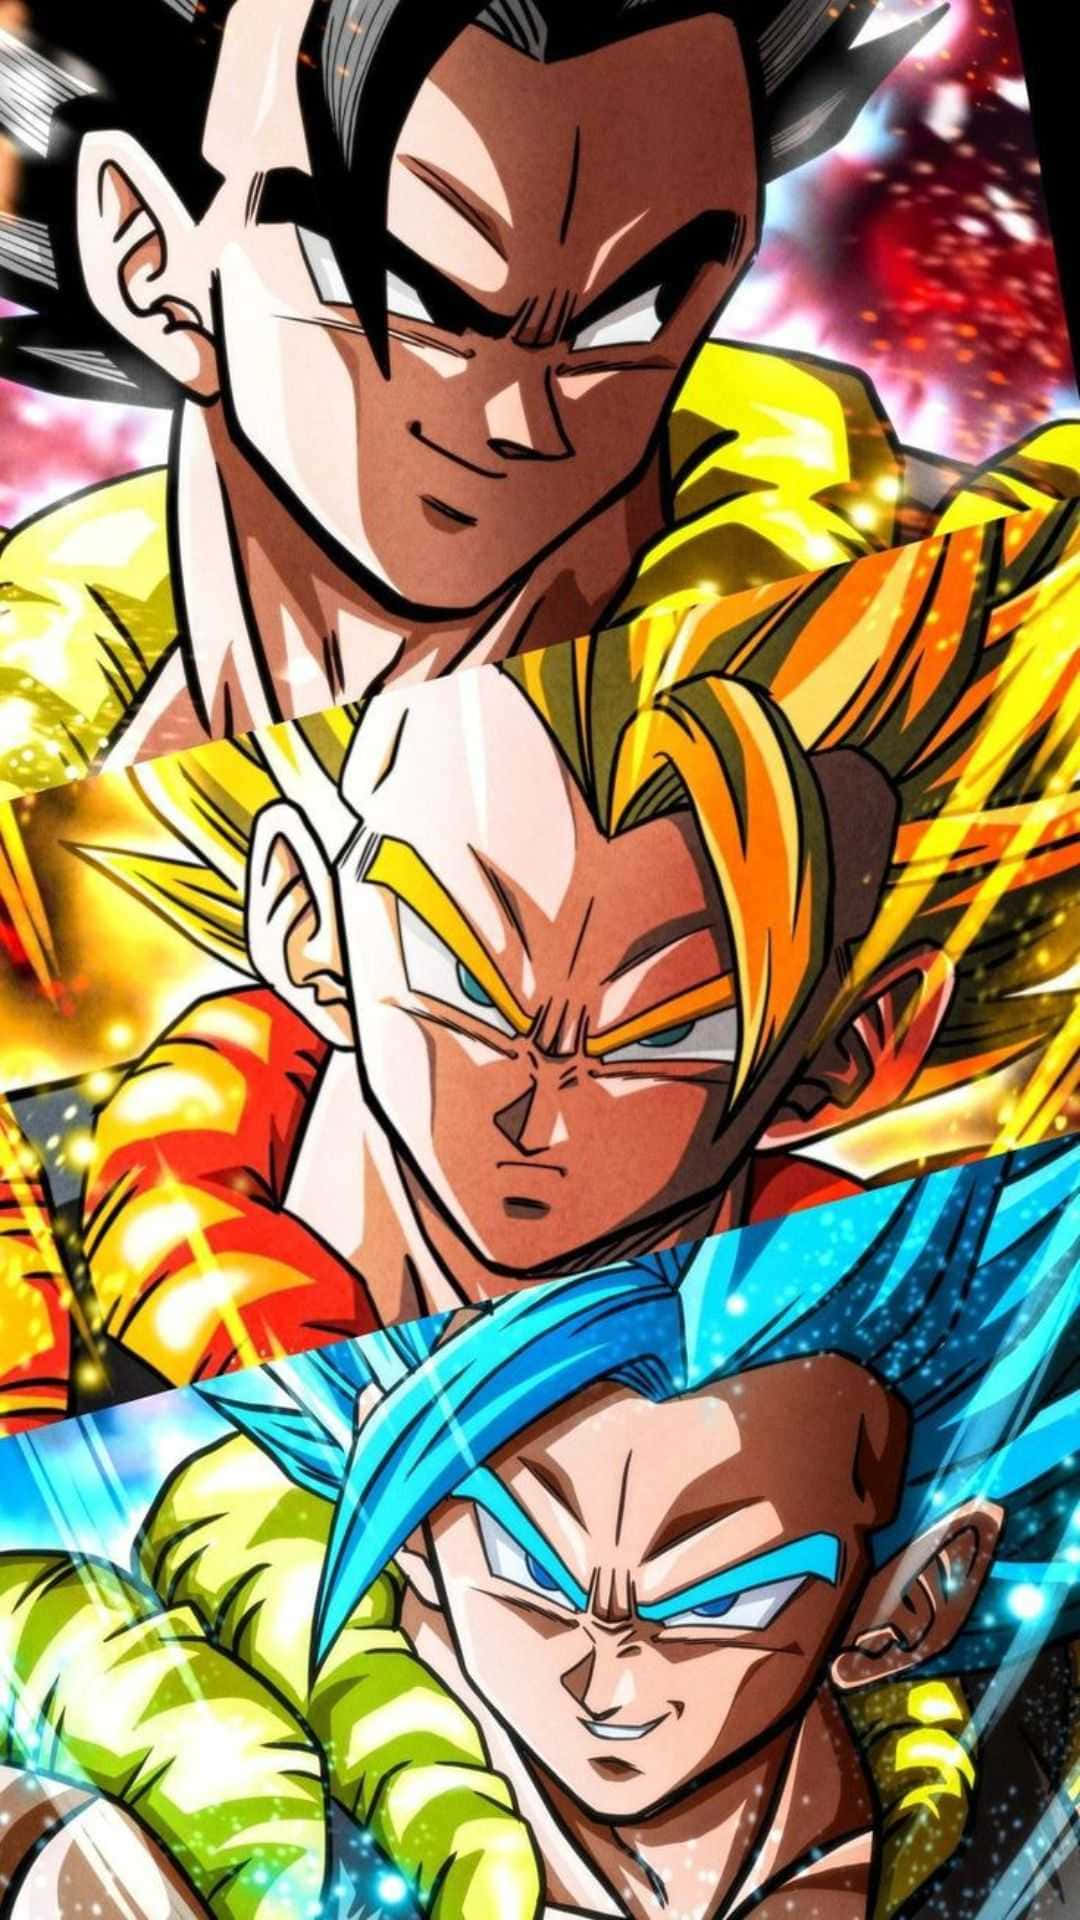 Goku and Dragon Ball Z Characters Group Shot Wallpaper